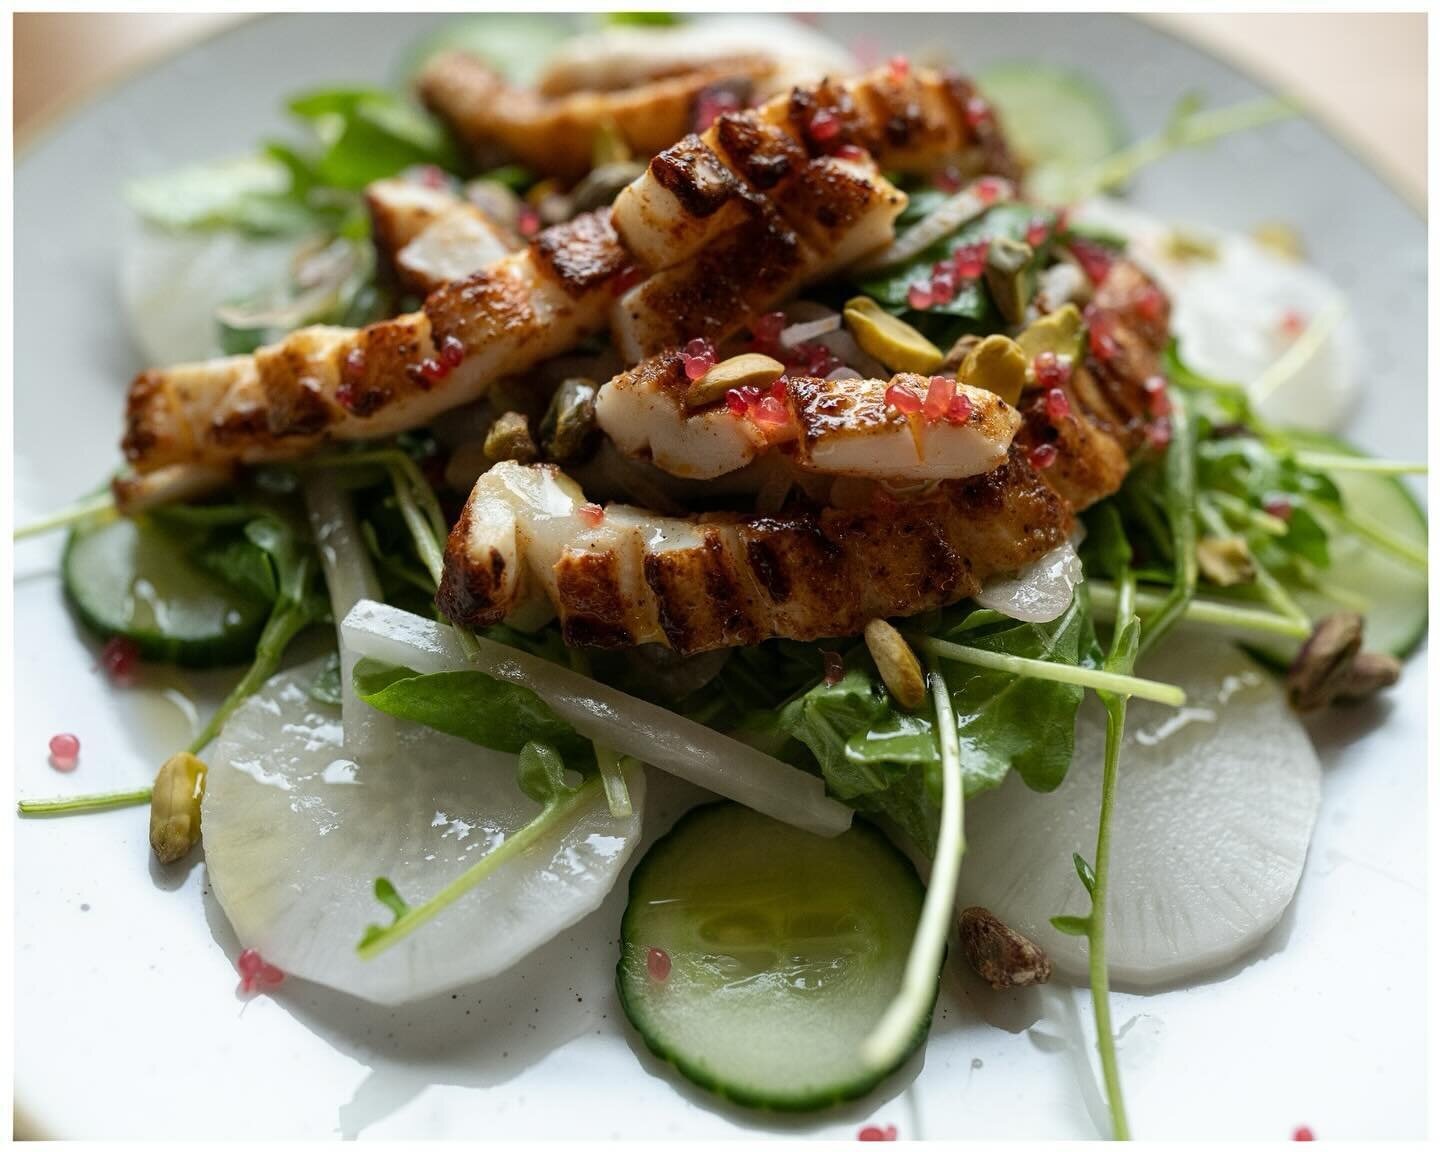 Our Humboldt Squid Salad is damn good, nuff said.
@secondteamkyle 📸